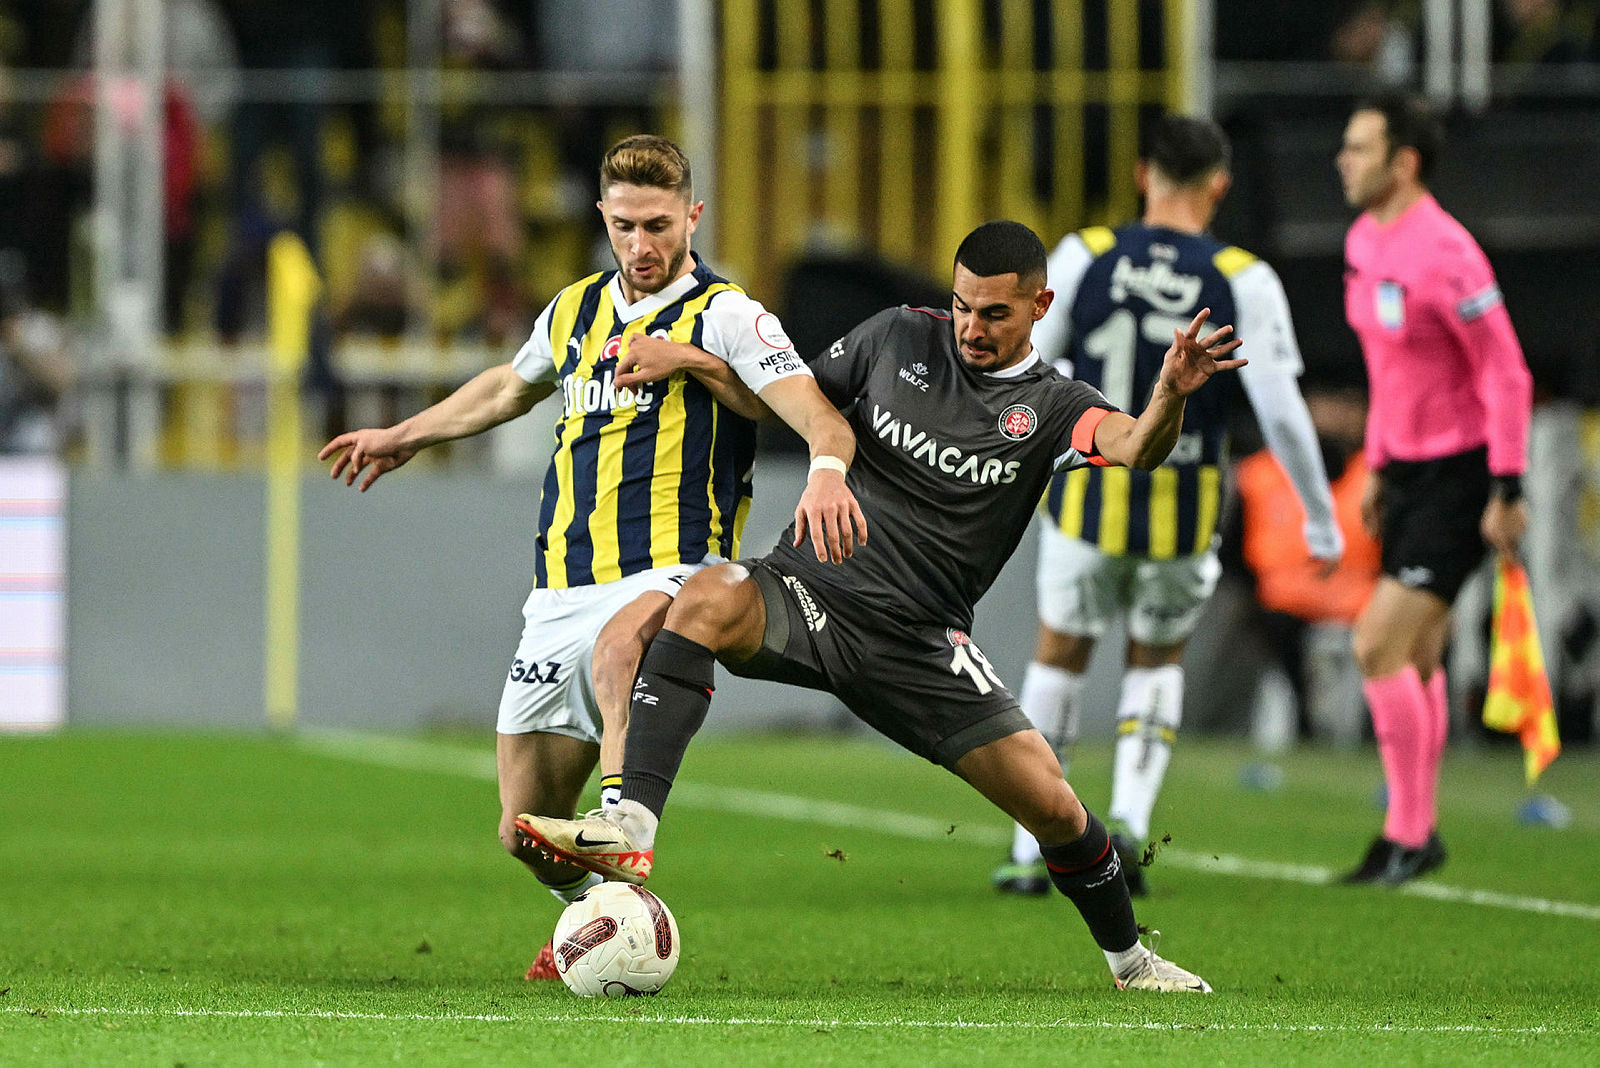 İsmail Kartal’dan radikal karar! İşte Fenerbahçe’nin Nordsjaelland maçı 11’i